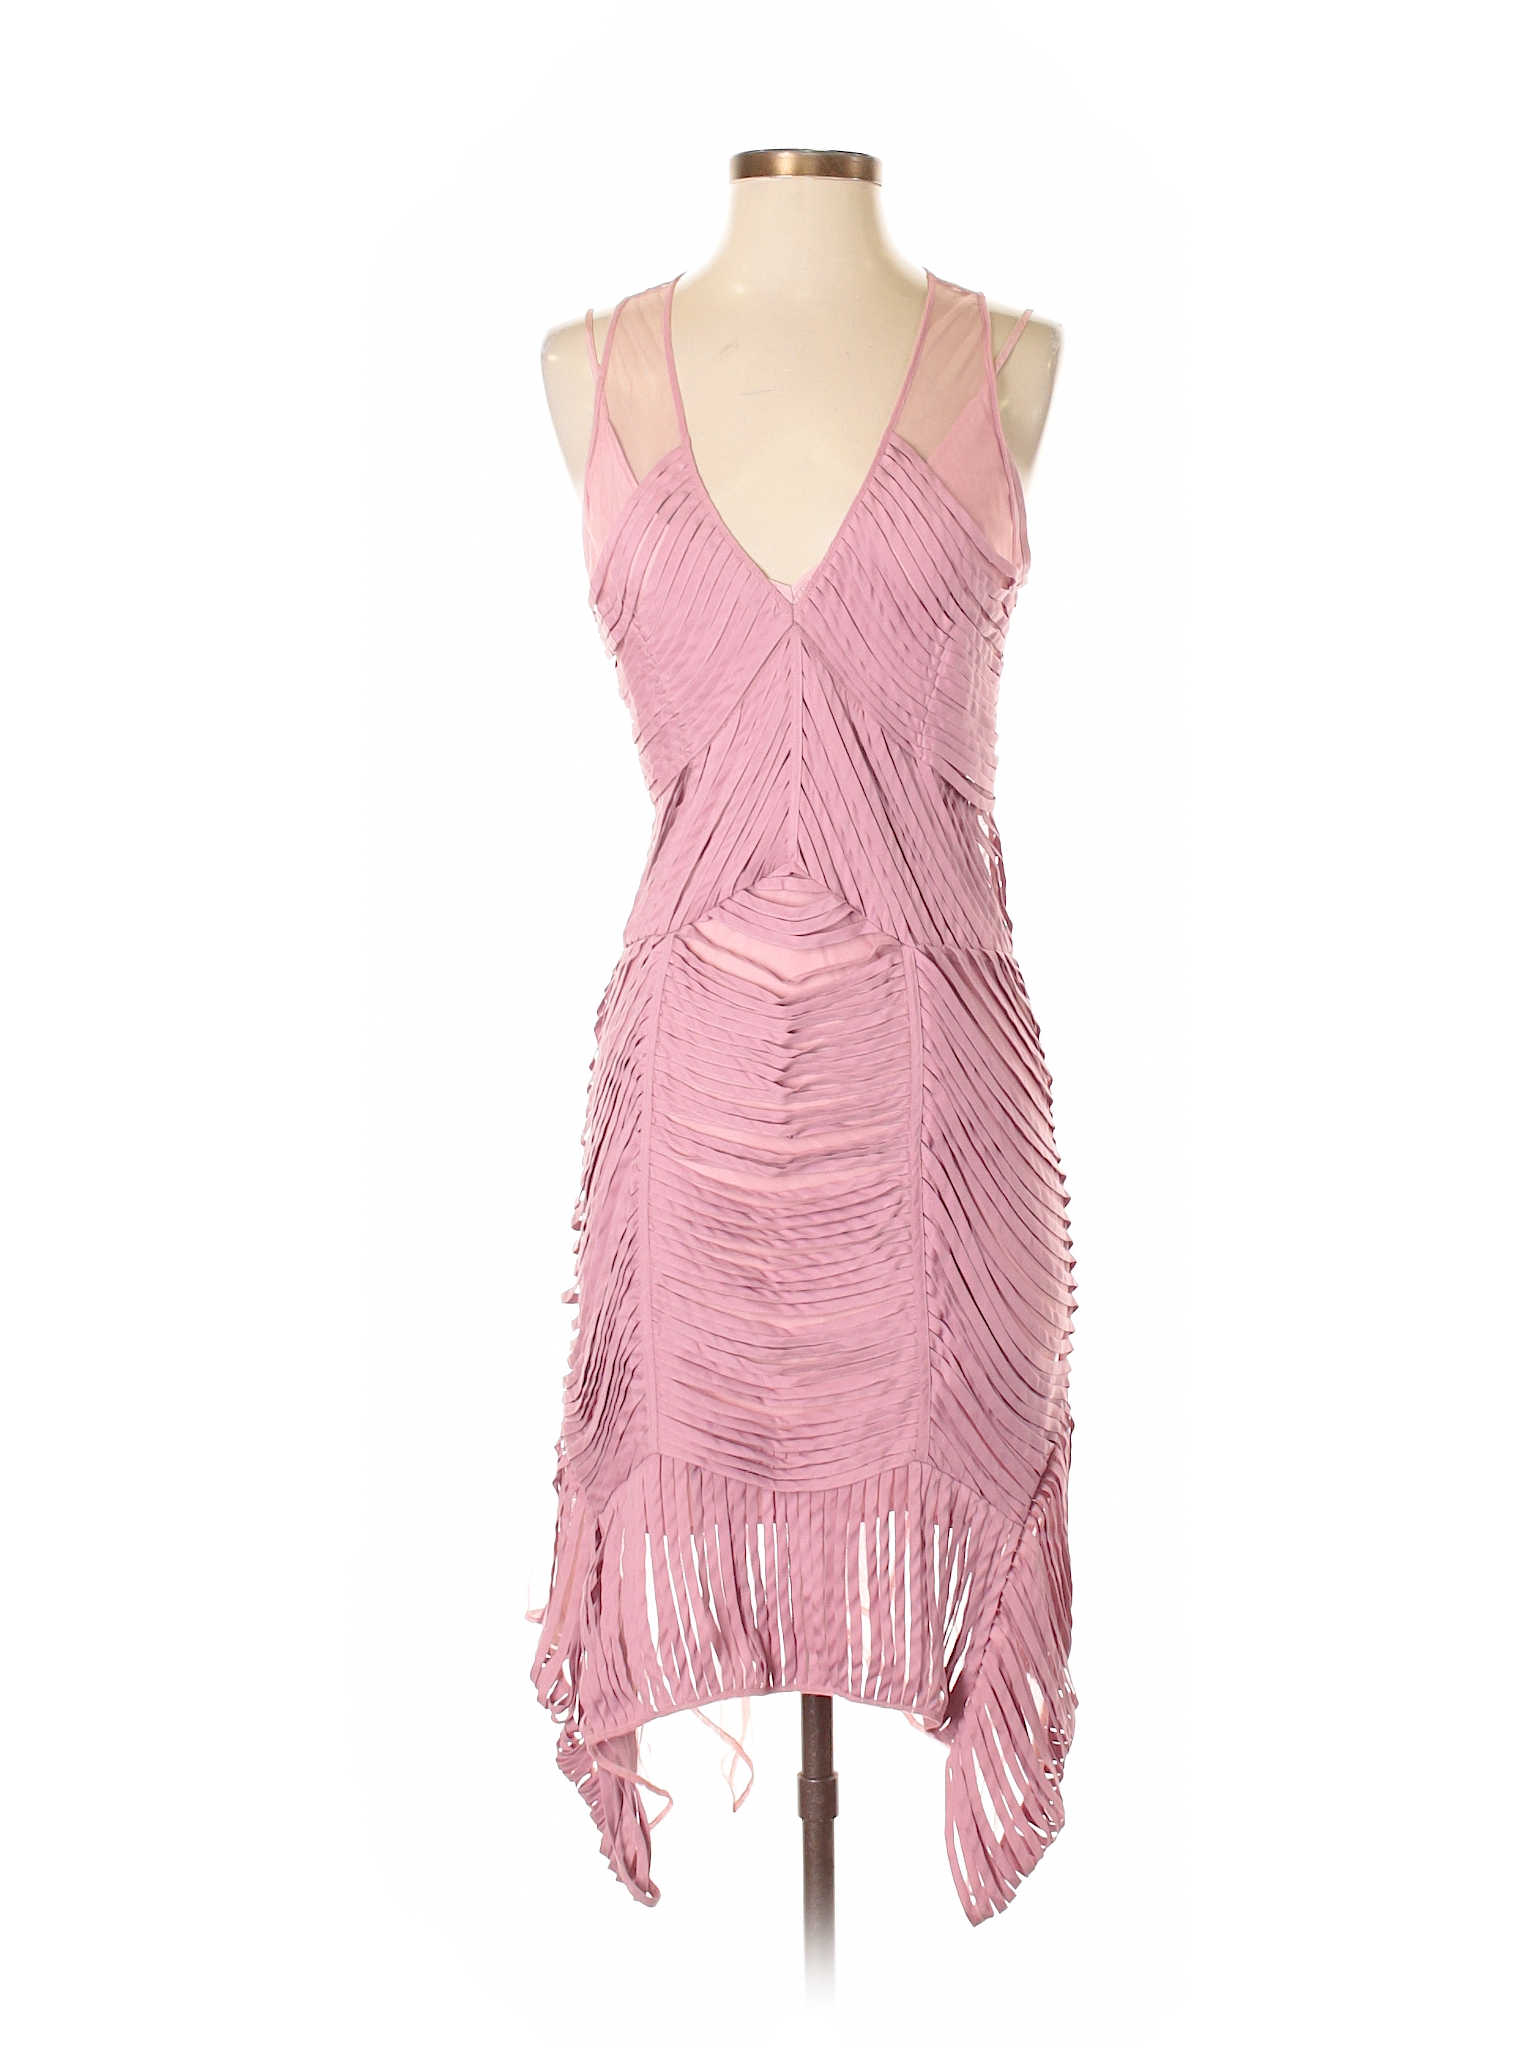 Sachin + Babi for Ankasa 100% Silk Solid Light Pink Cocktail Dress Size ...